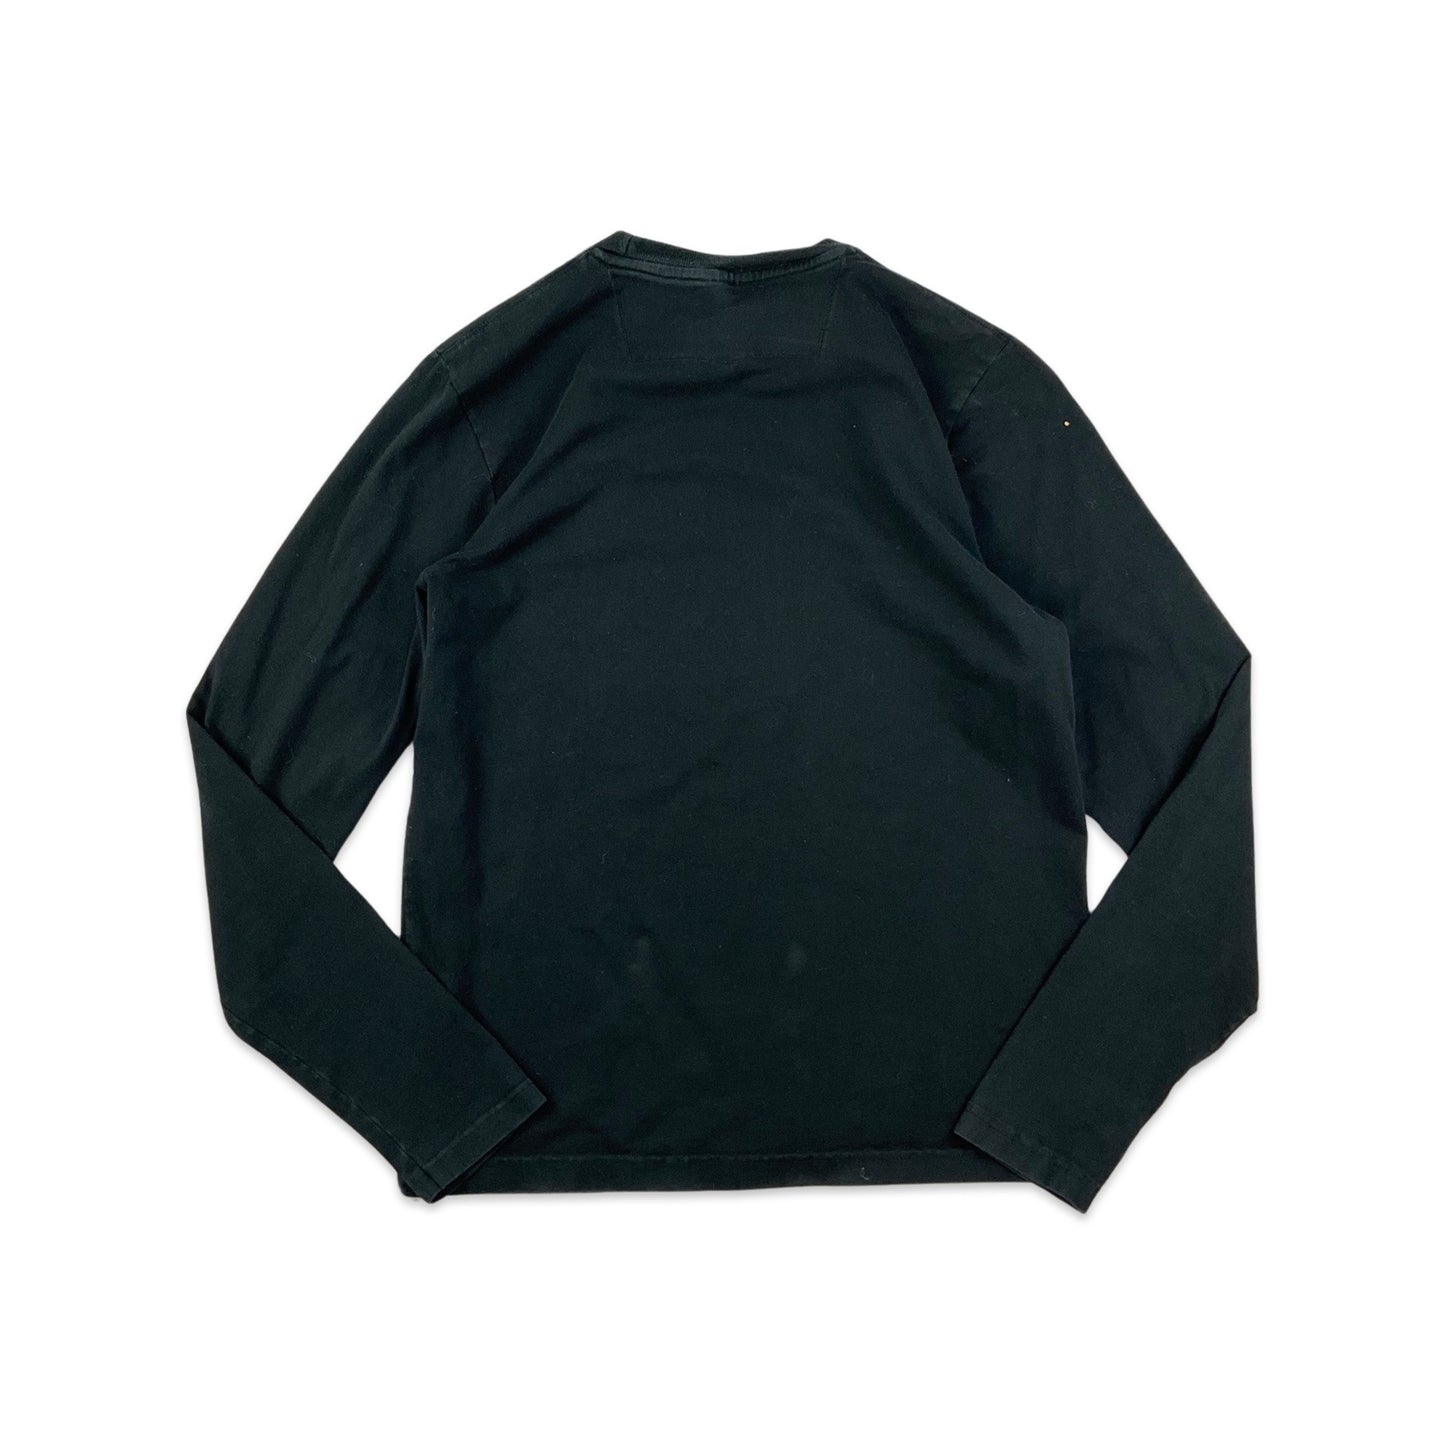 Levi's Black Long Sleeved Tee T-Shirt XS S